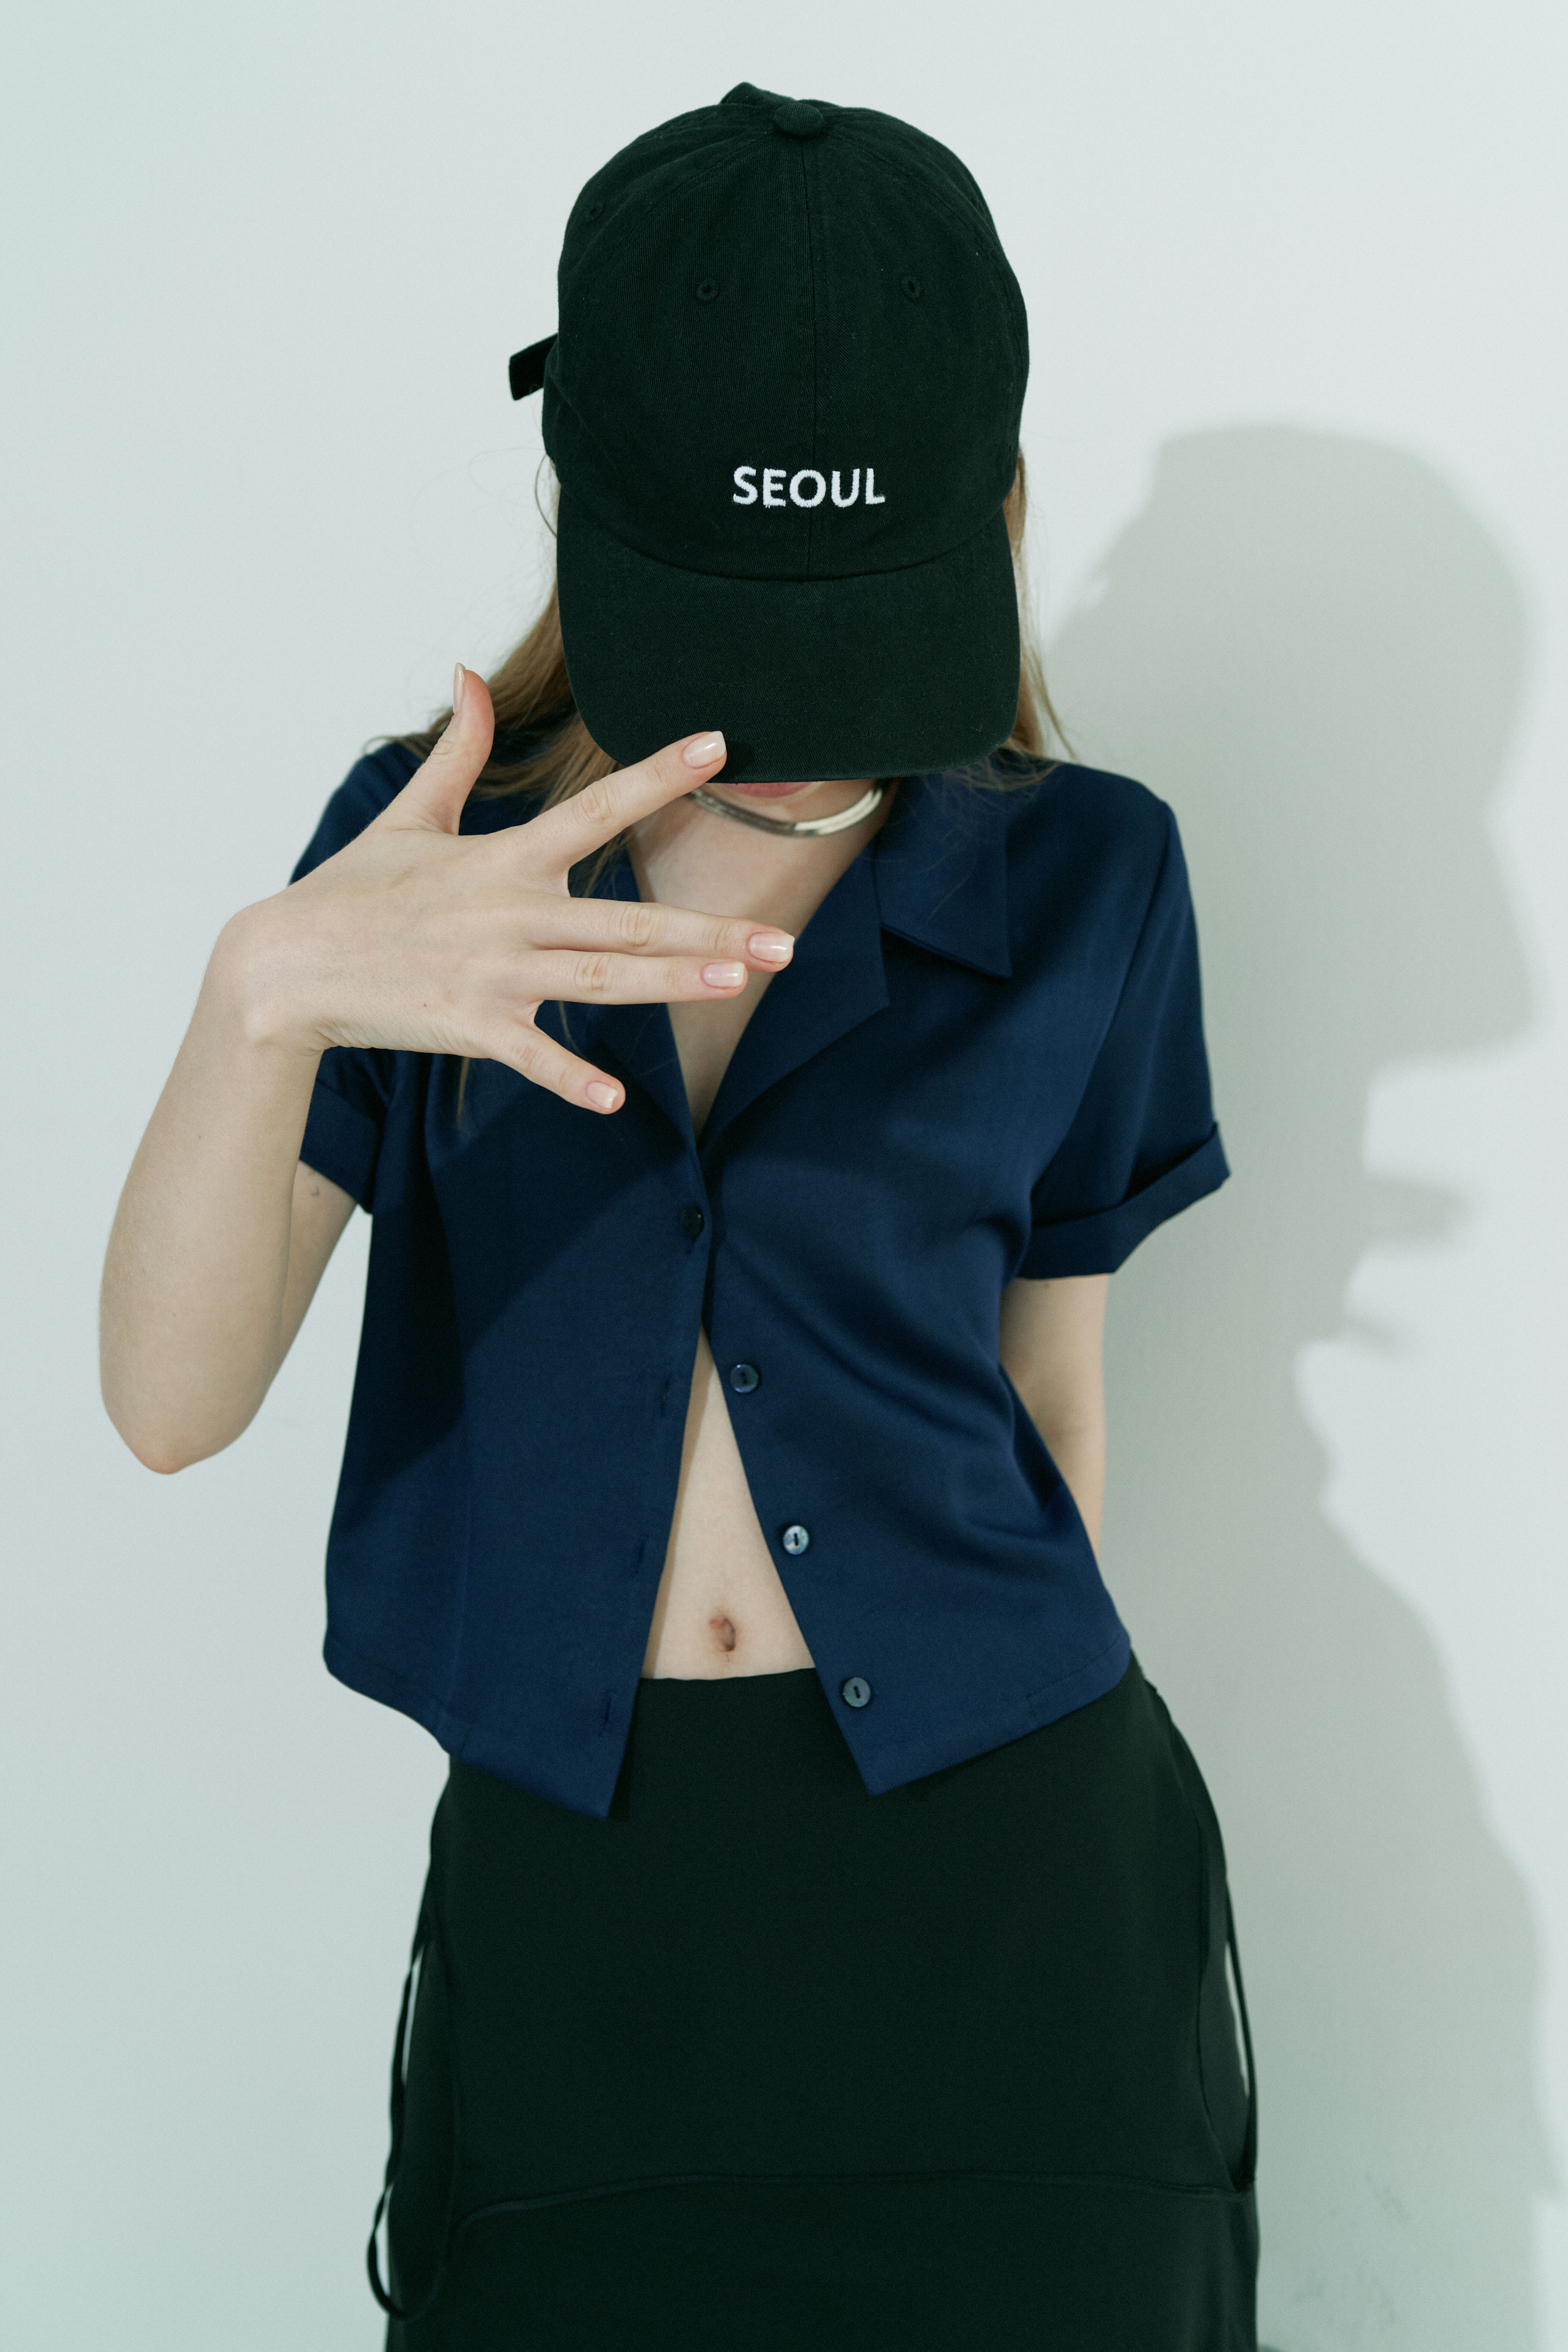 Seoul ball cap